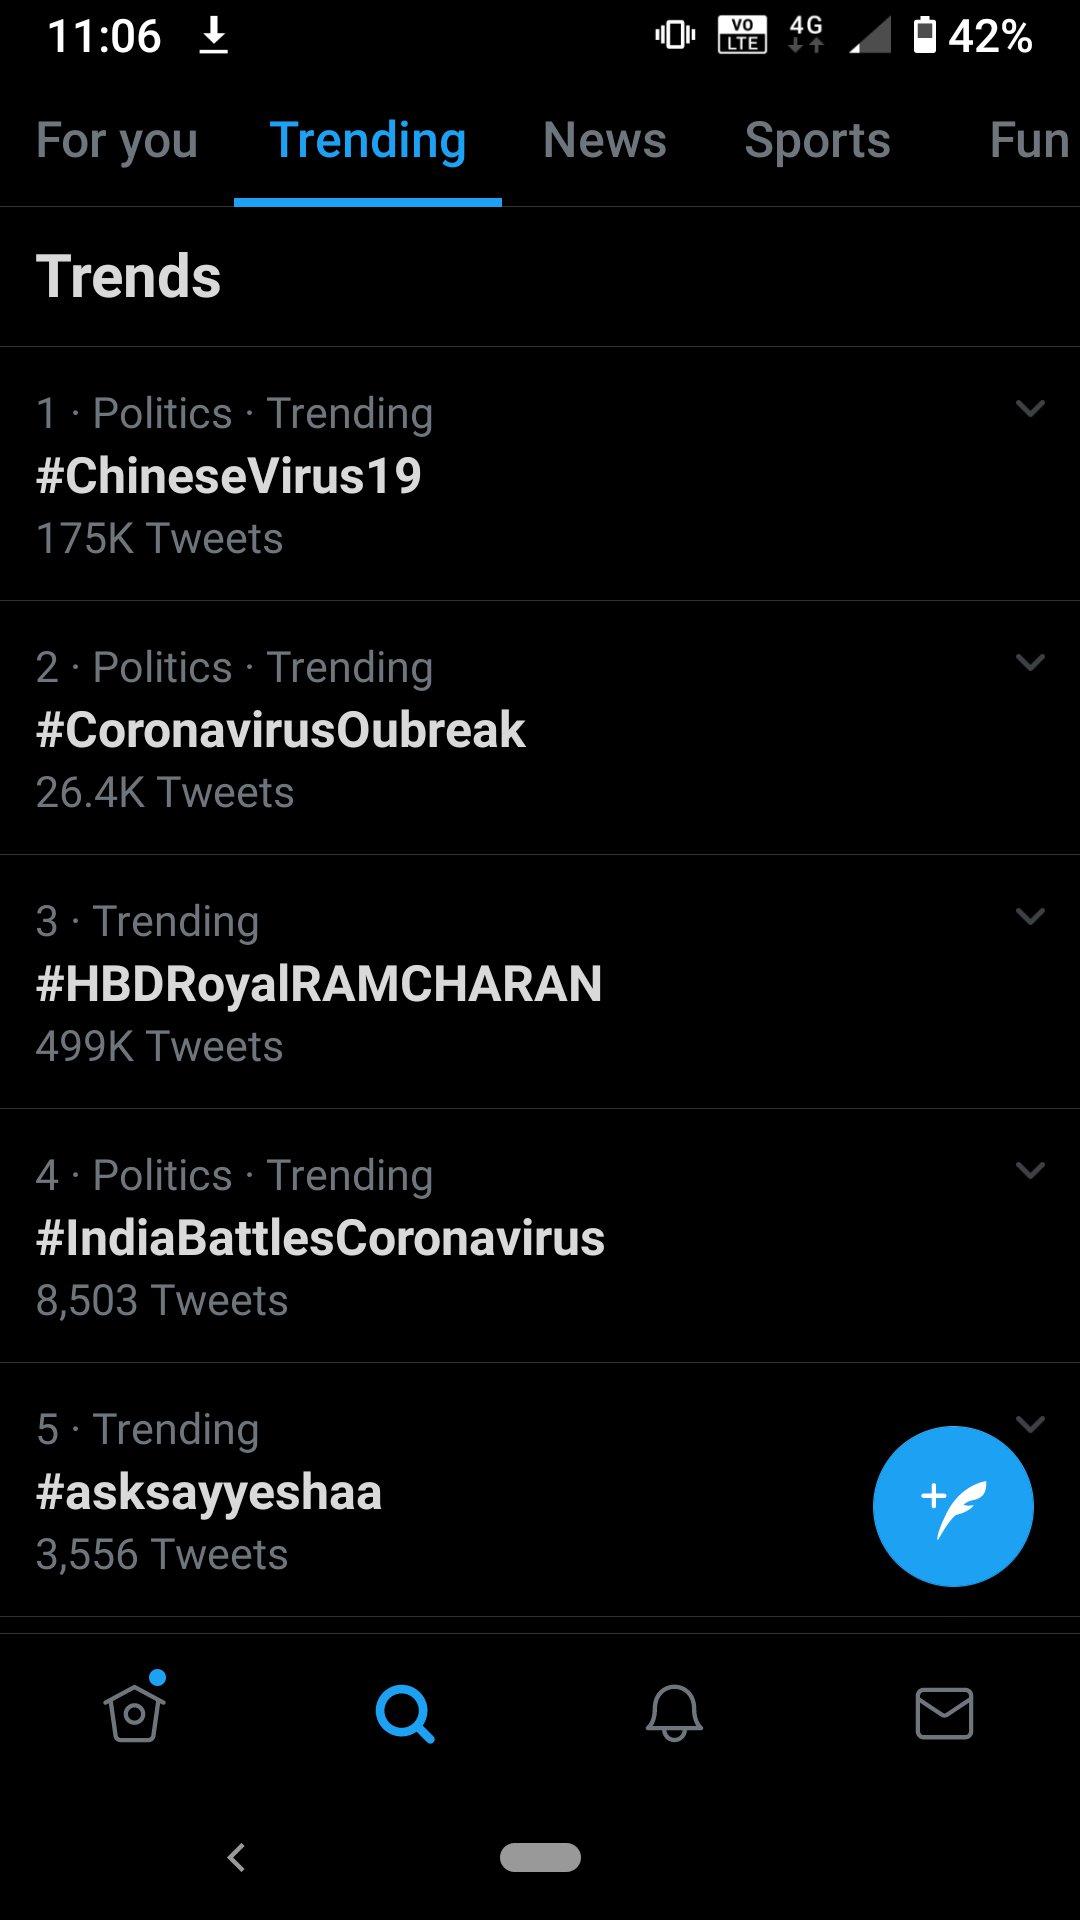 Happy Birthday Mega Power Star Ram Charan..
Trending on 3rd place india 